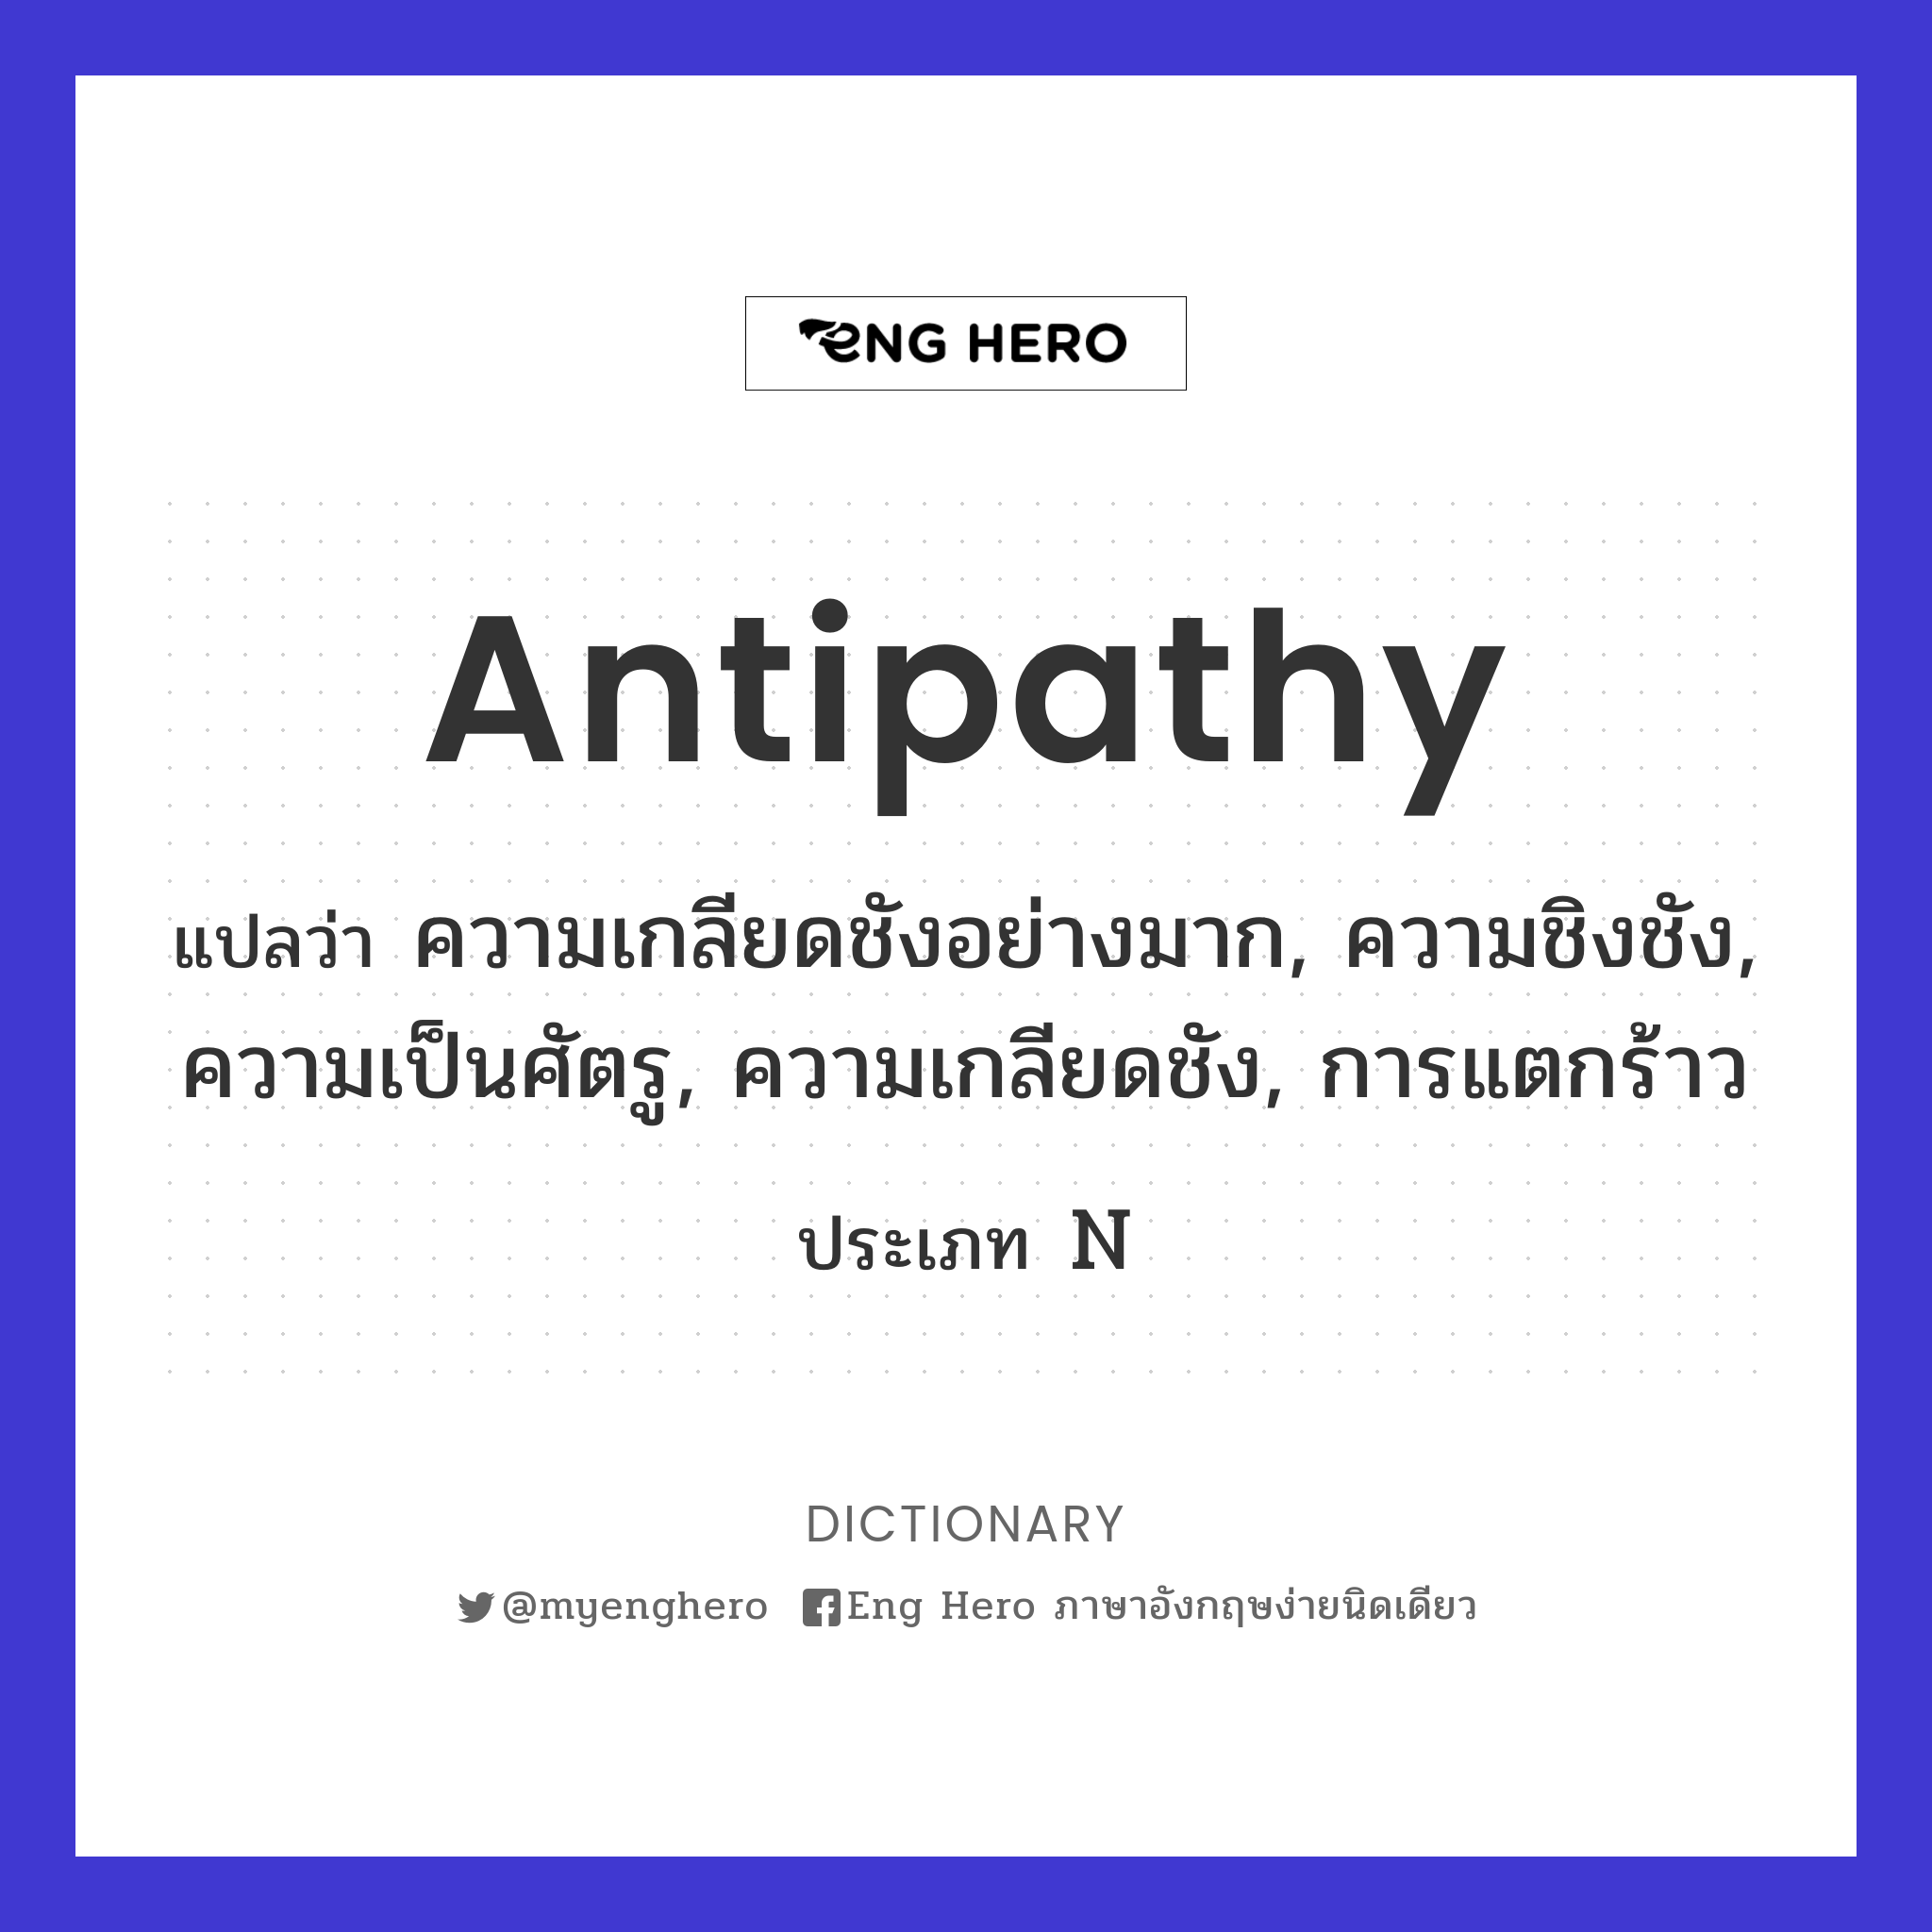 antipathy